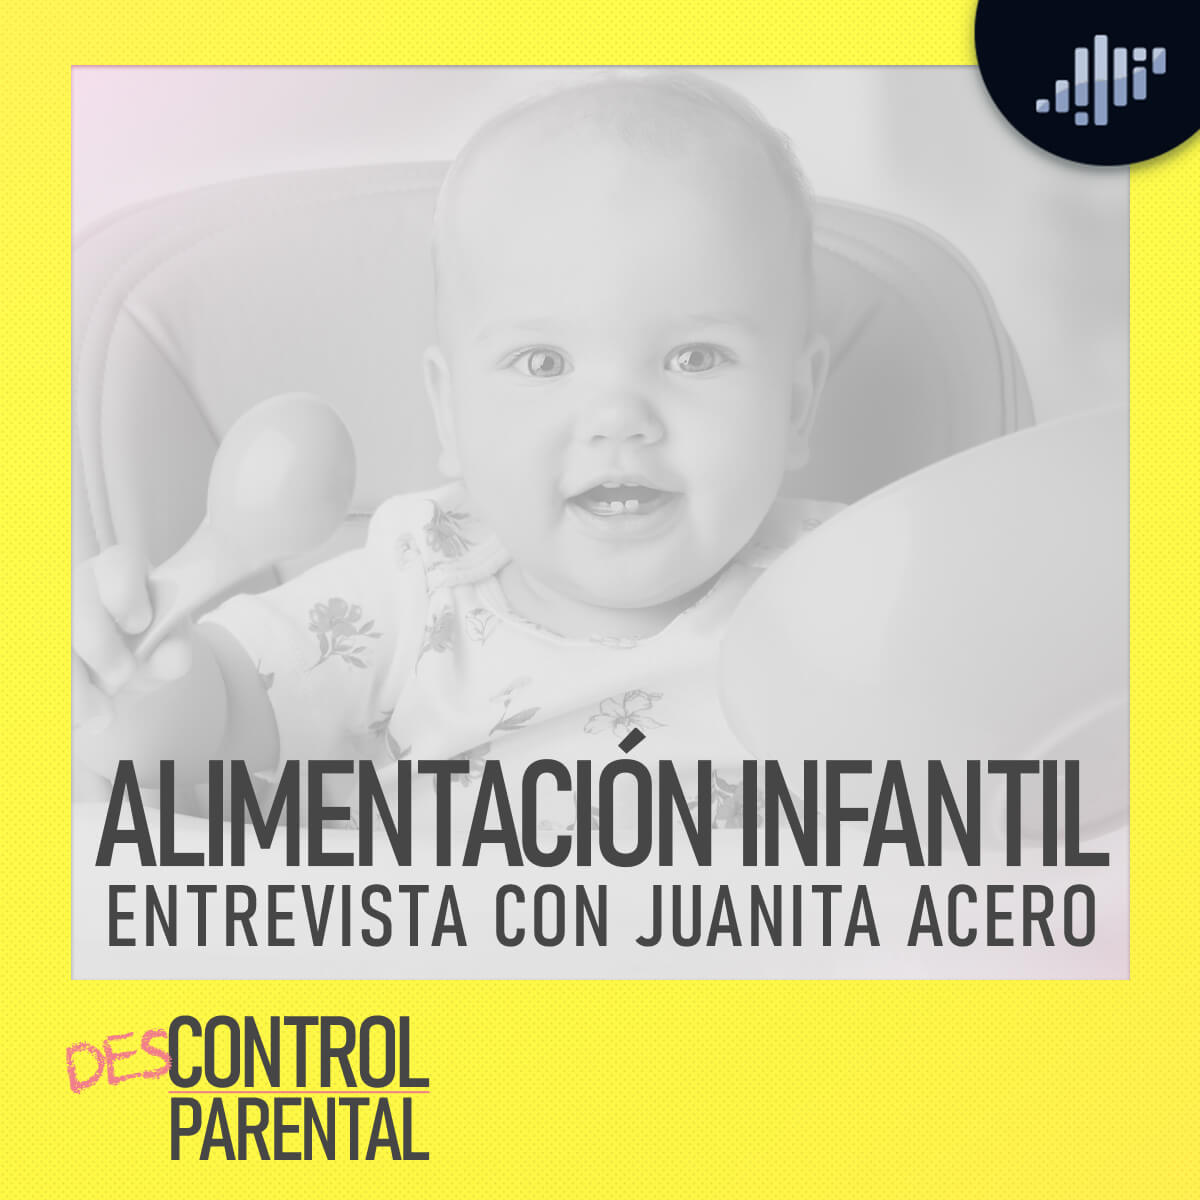 Alimentación infantil "Entrevista Juanita Acero" | Descontrol Parental